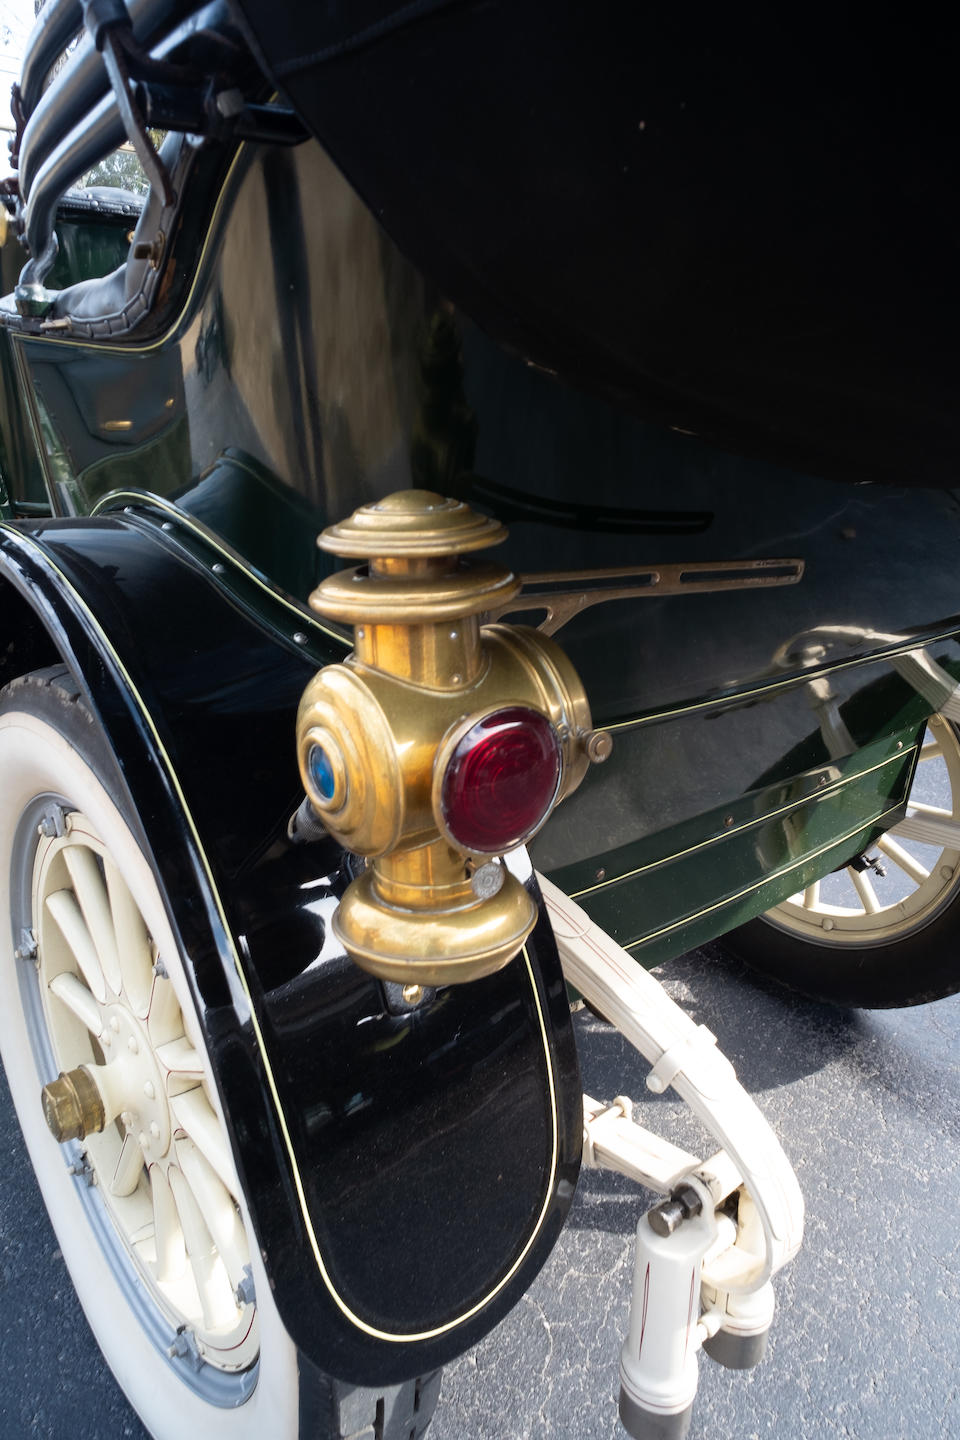 <b>1912 Oakland Model 30 Tourer</b><br />Chassis no. 7500